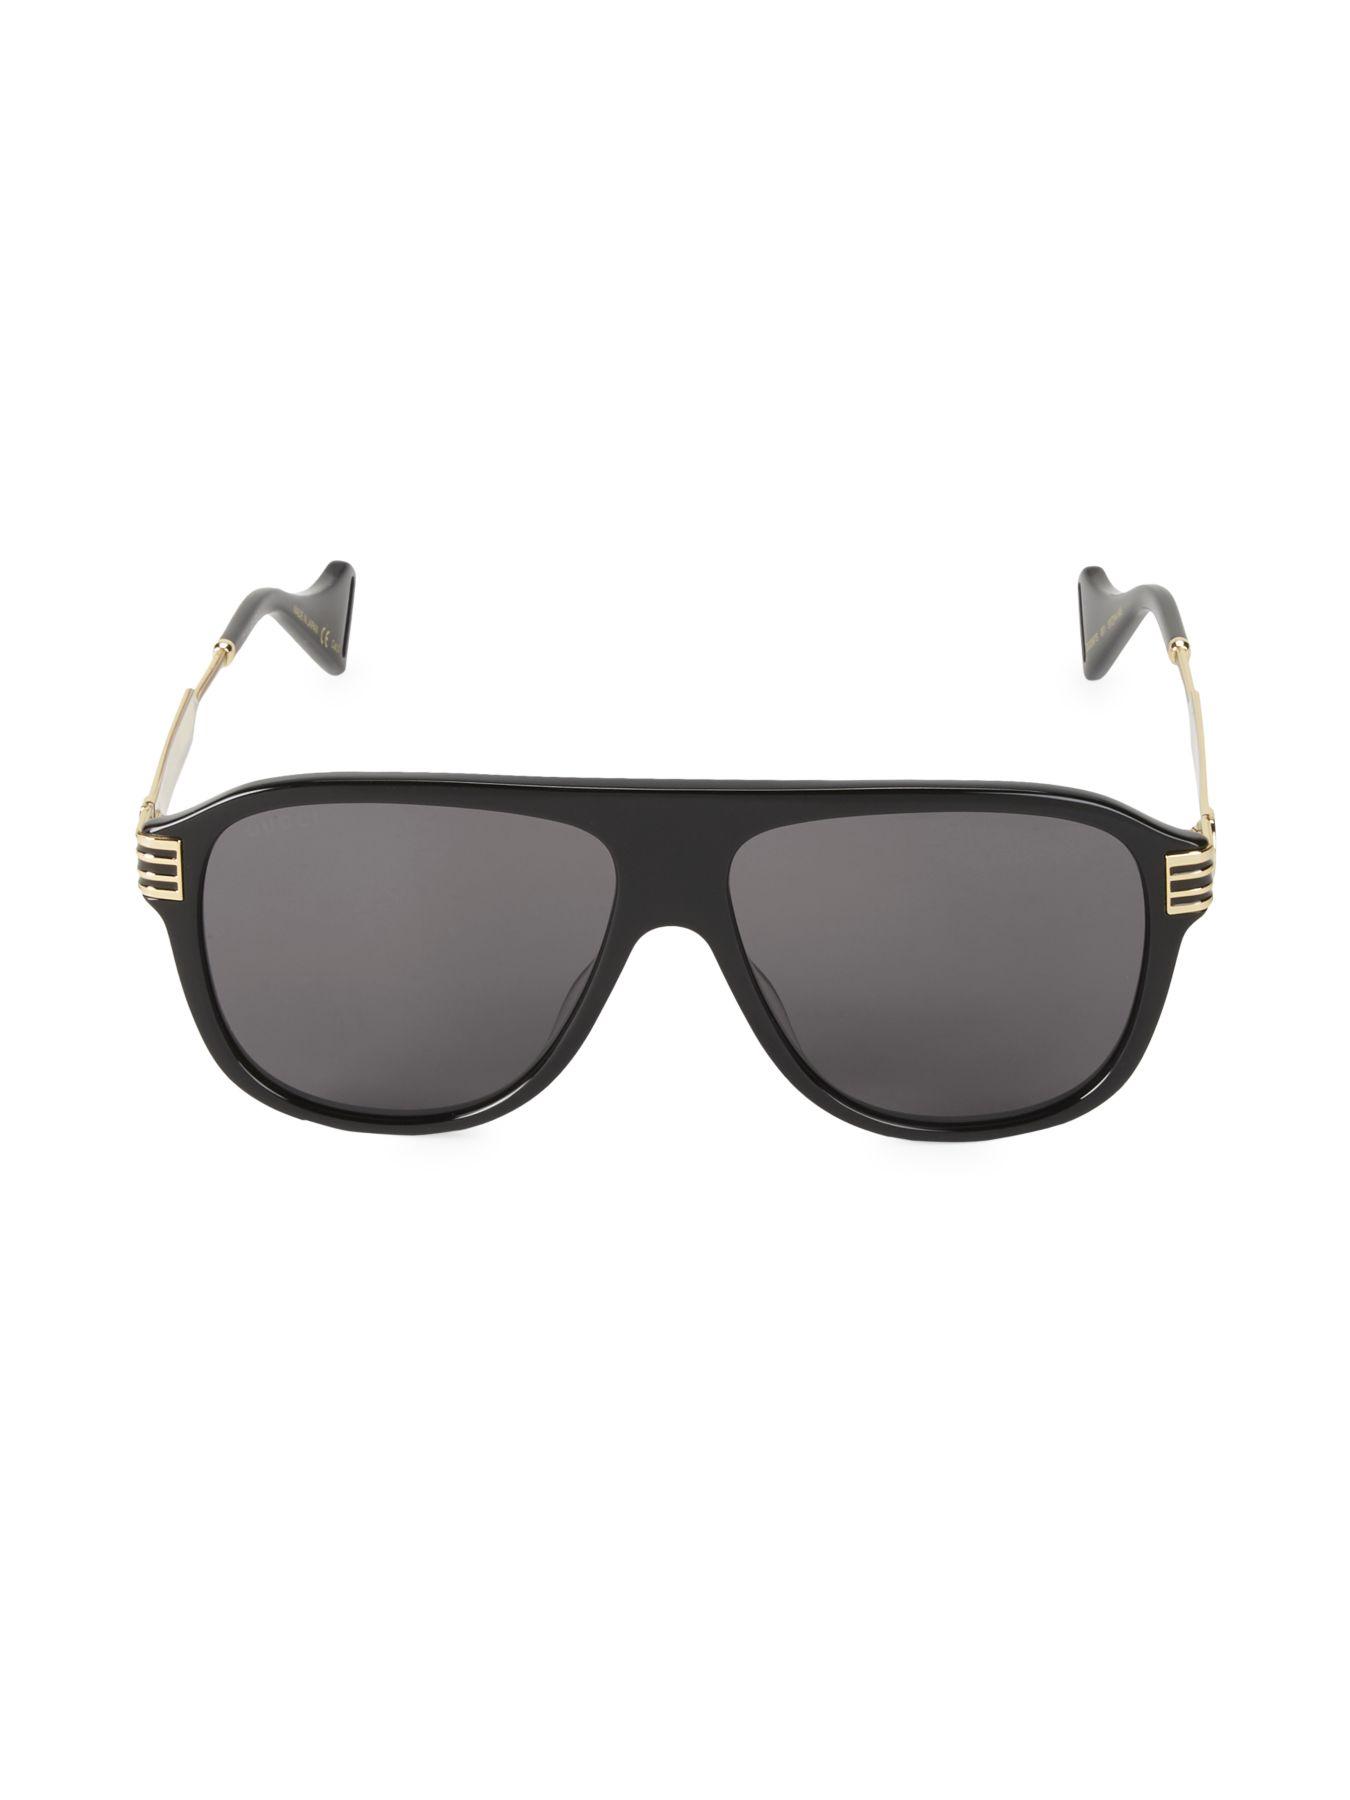 Gucci 57mm Pilot Sunglasses in Black for Men - Lyst